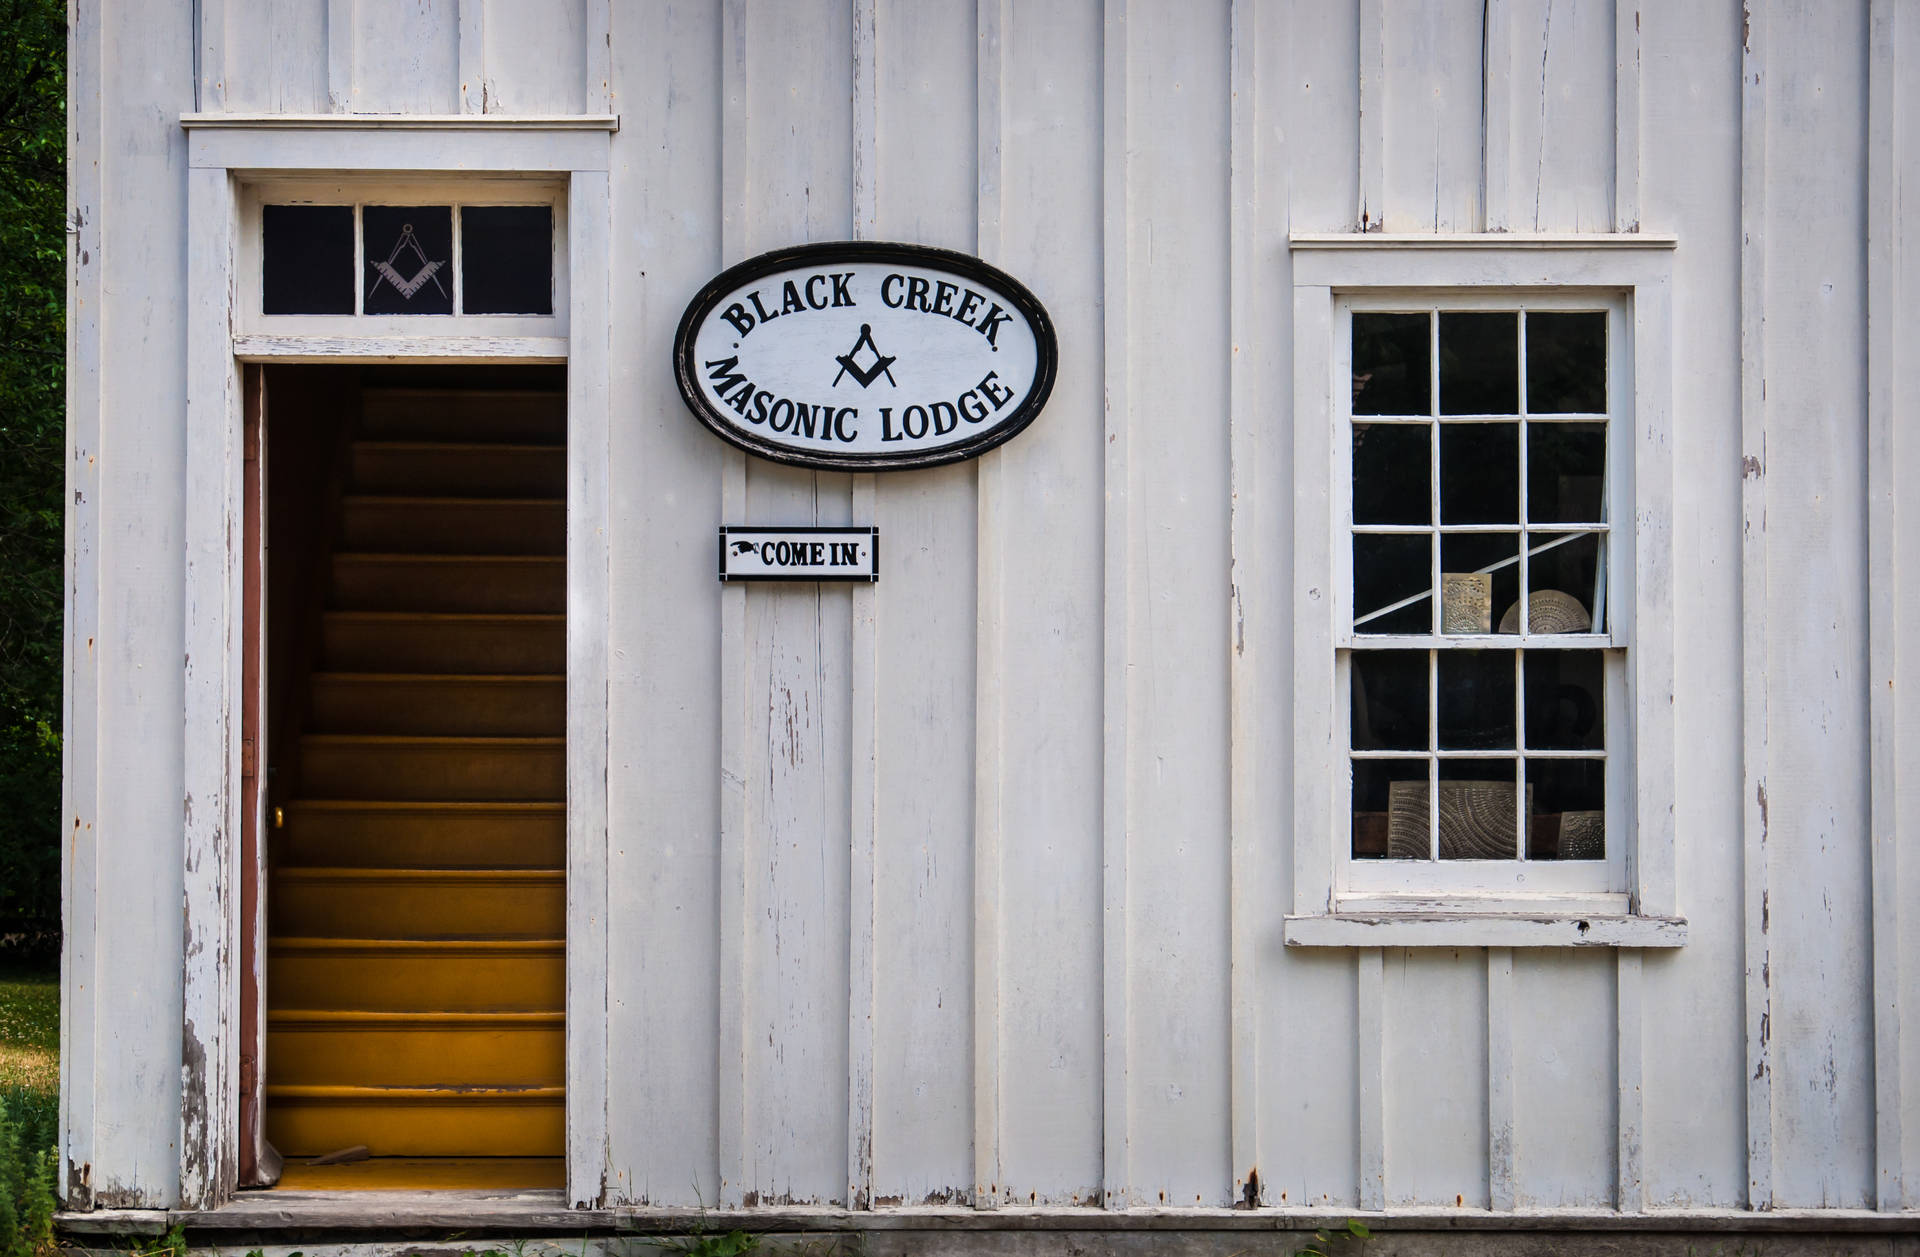 Black Creek Masonic Lodge